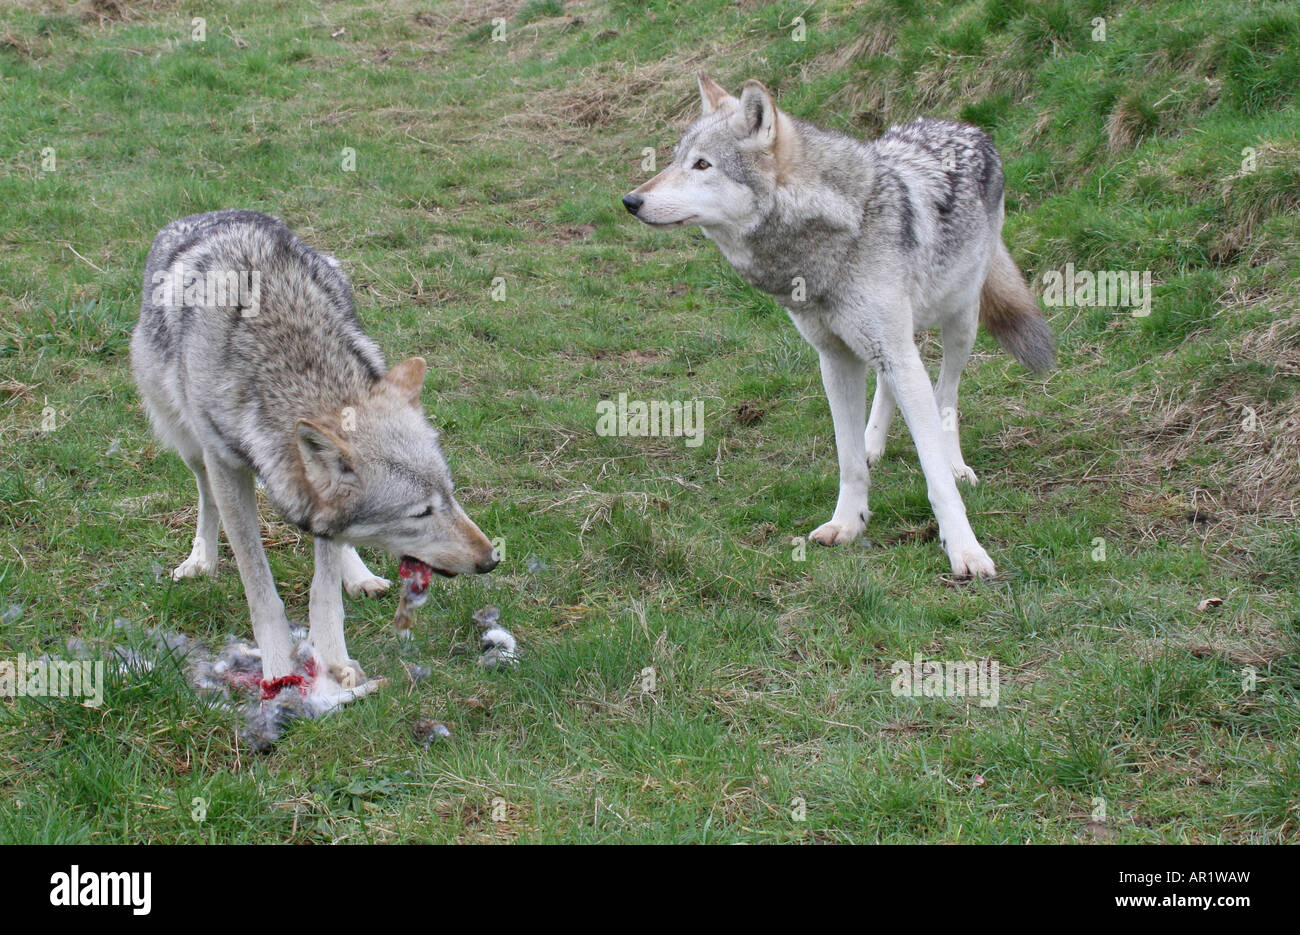 grey wolves eating rabbit at Beenham Reading Stock Photo